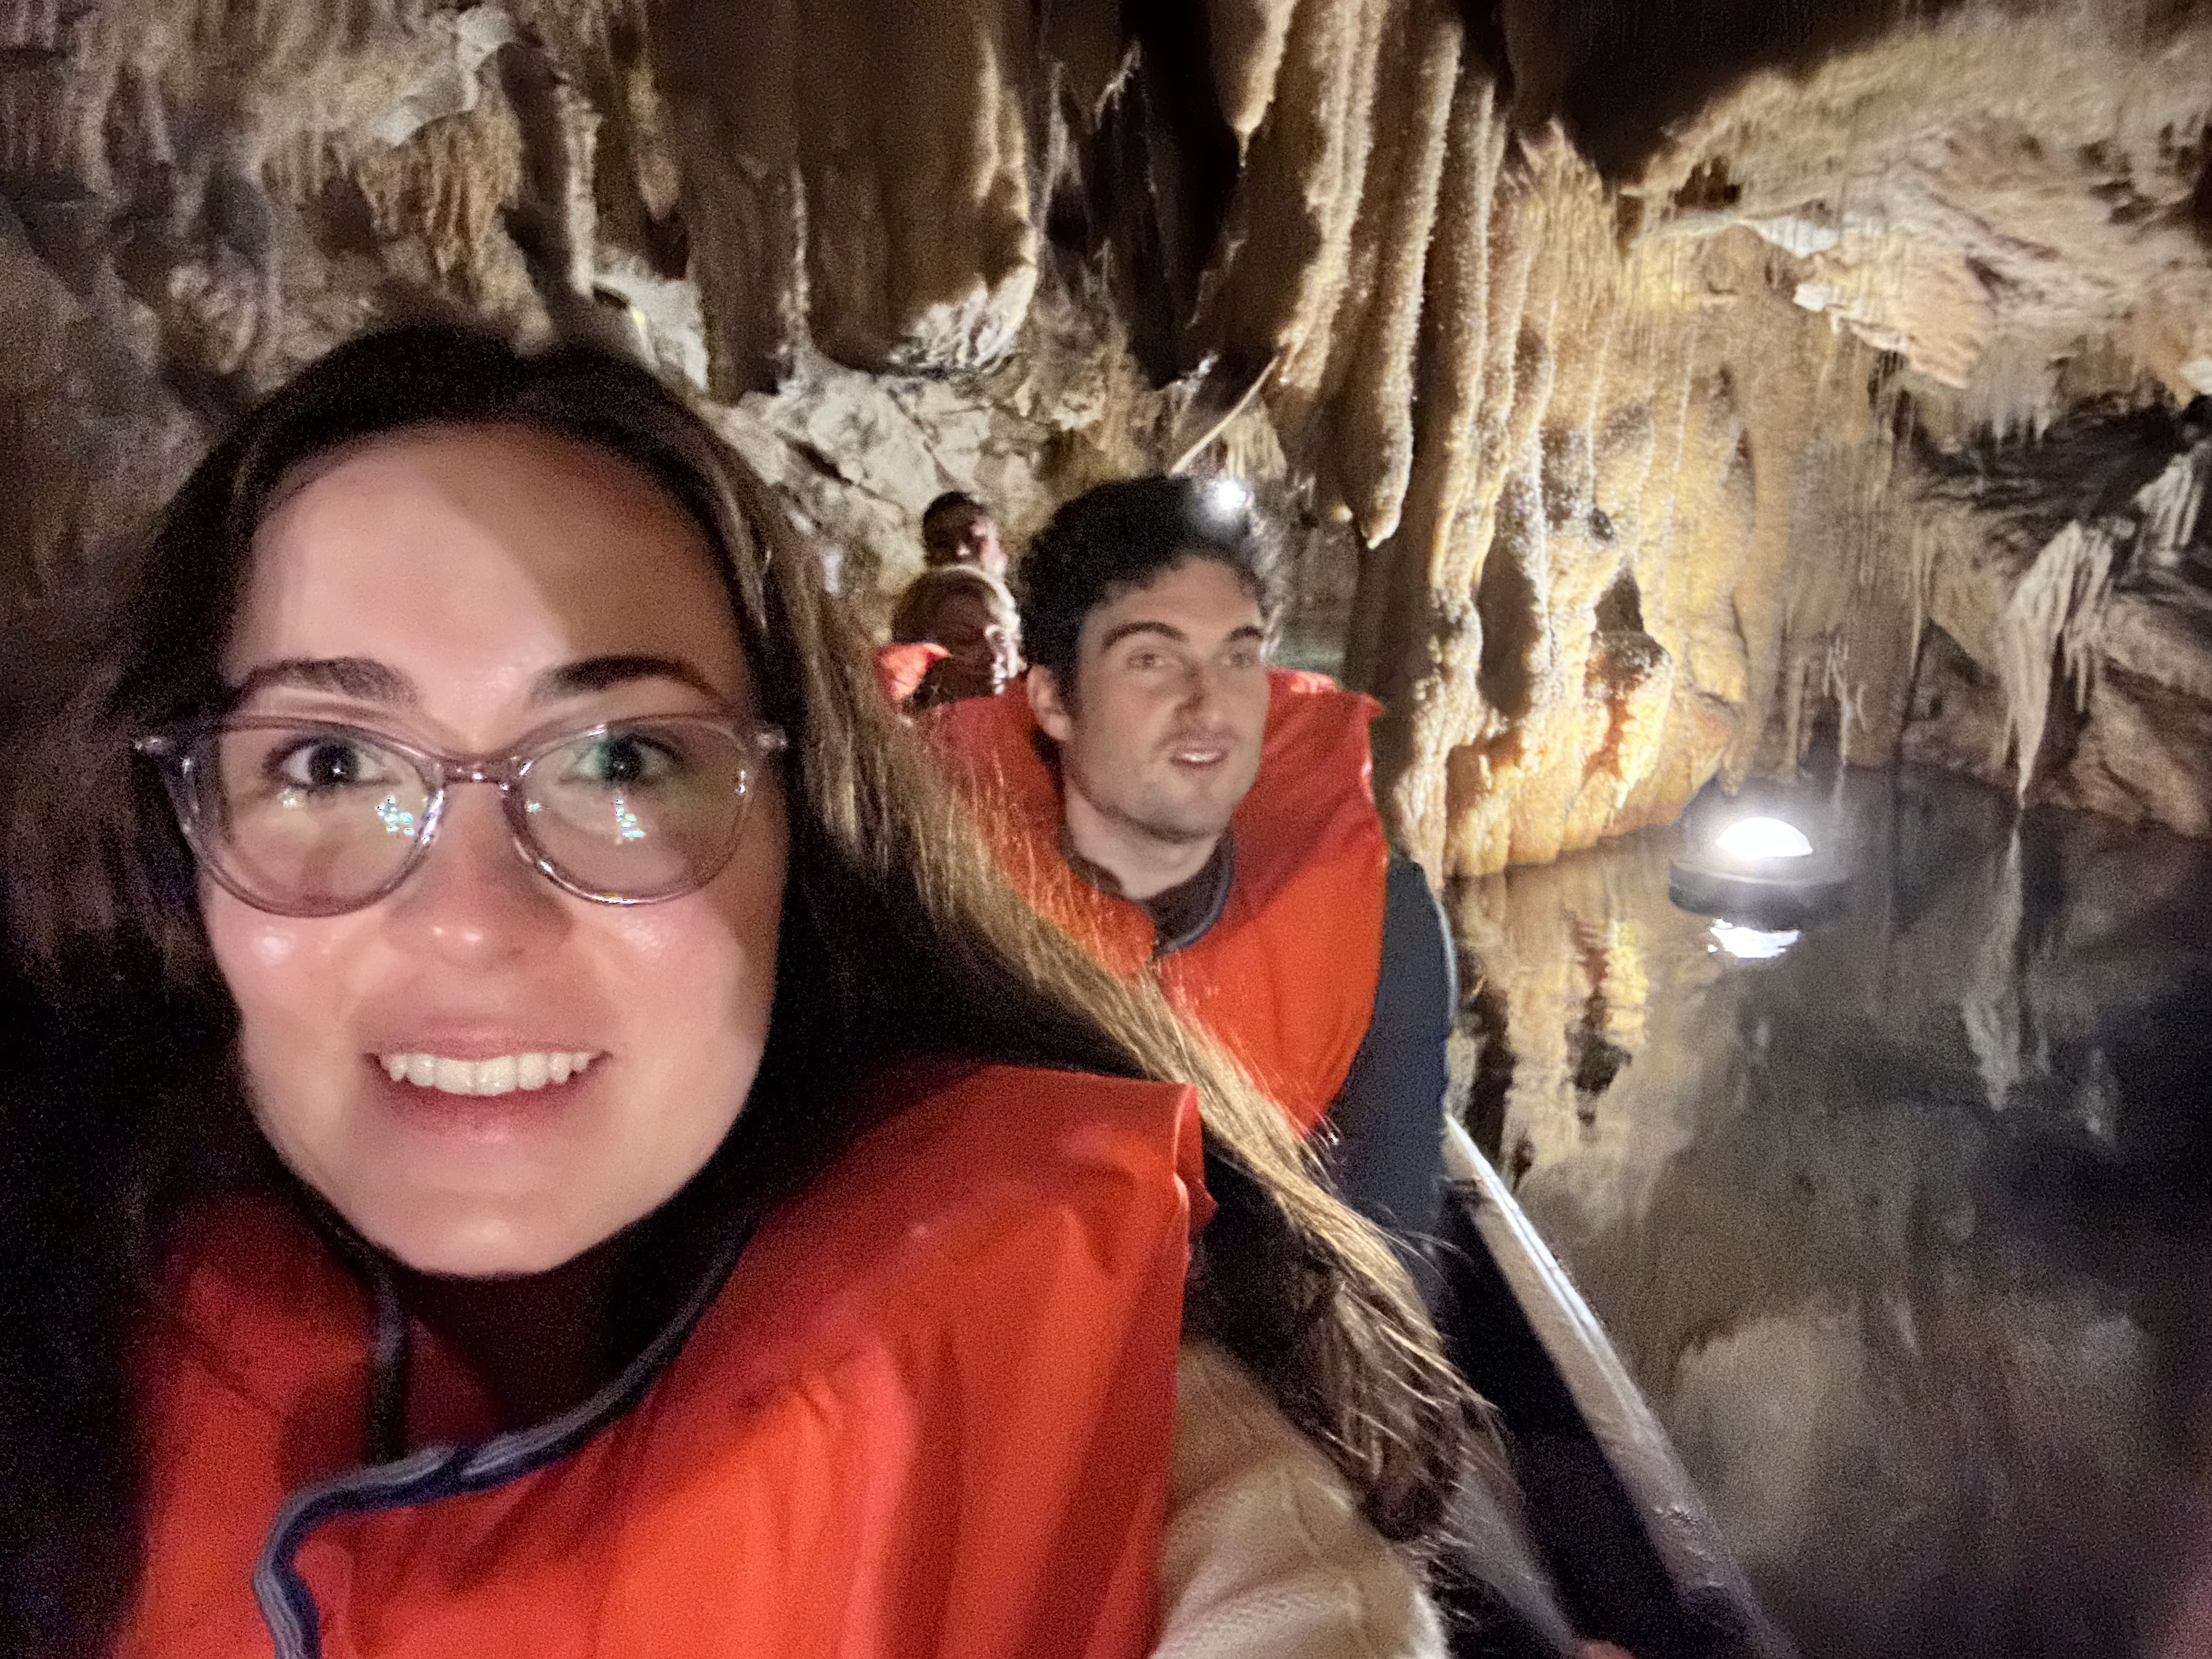 Cave selfie